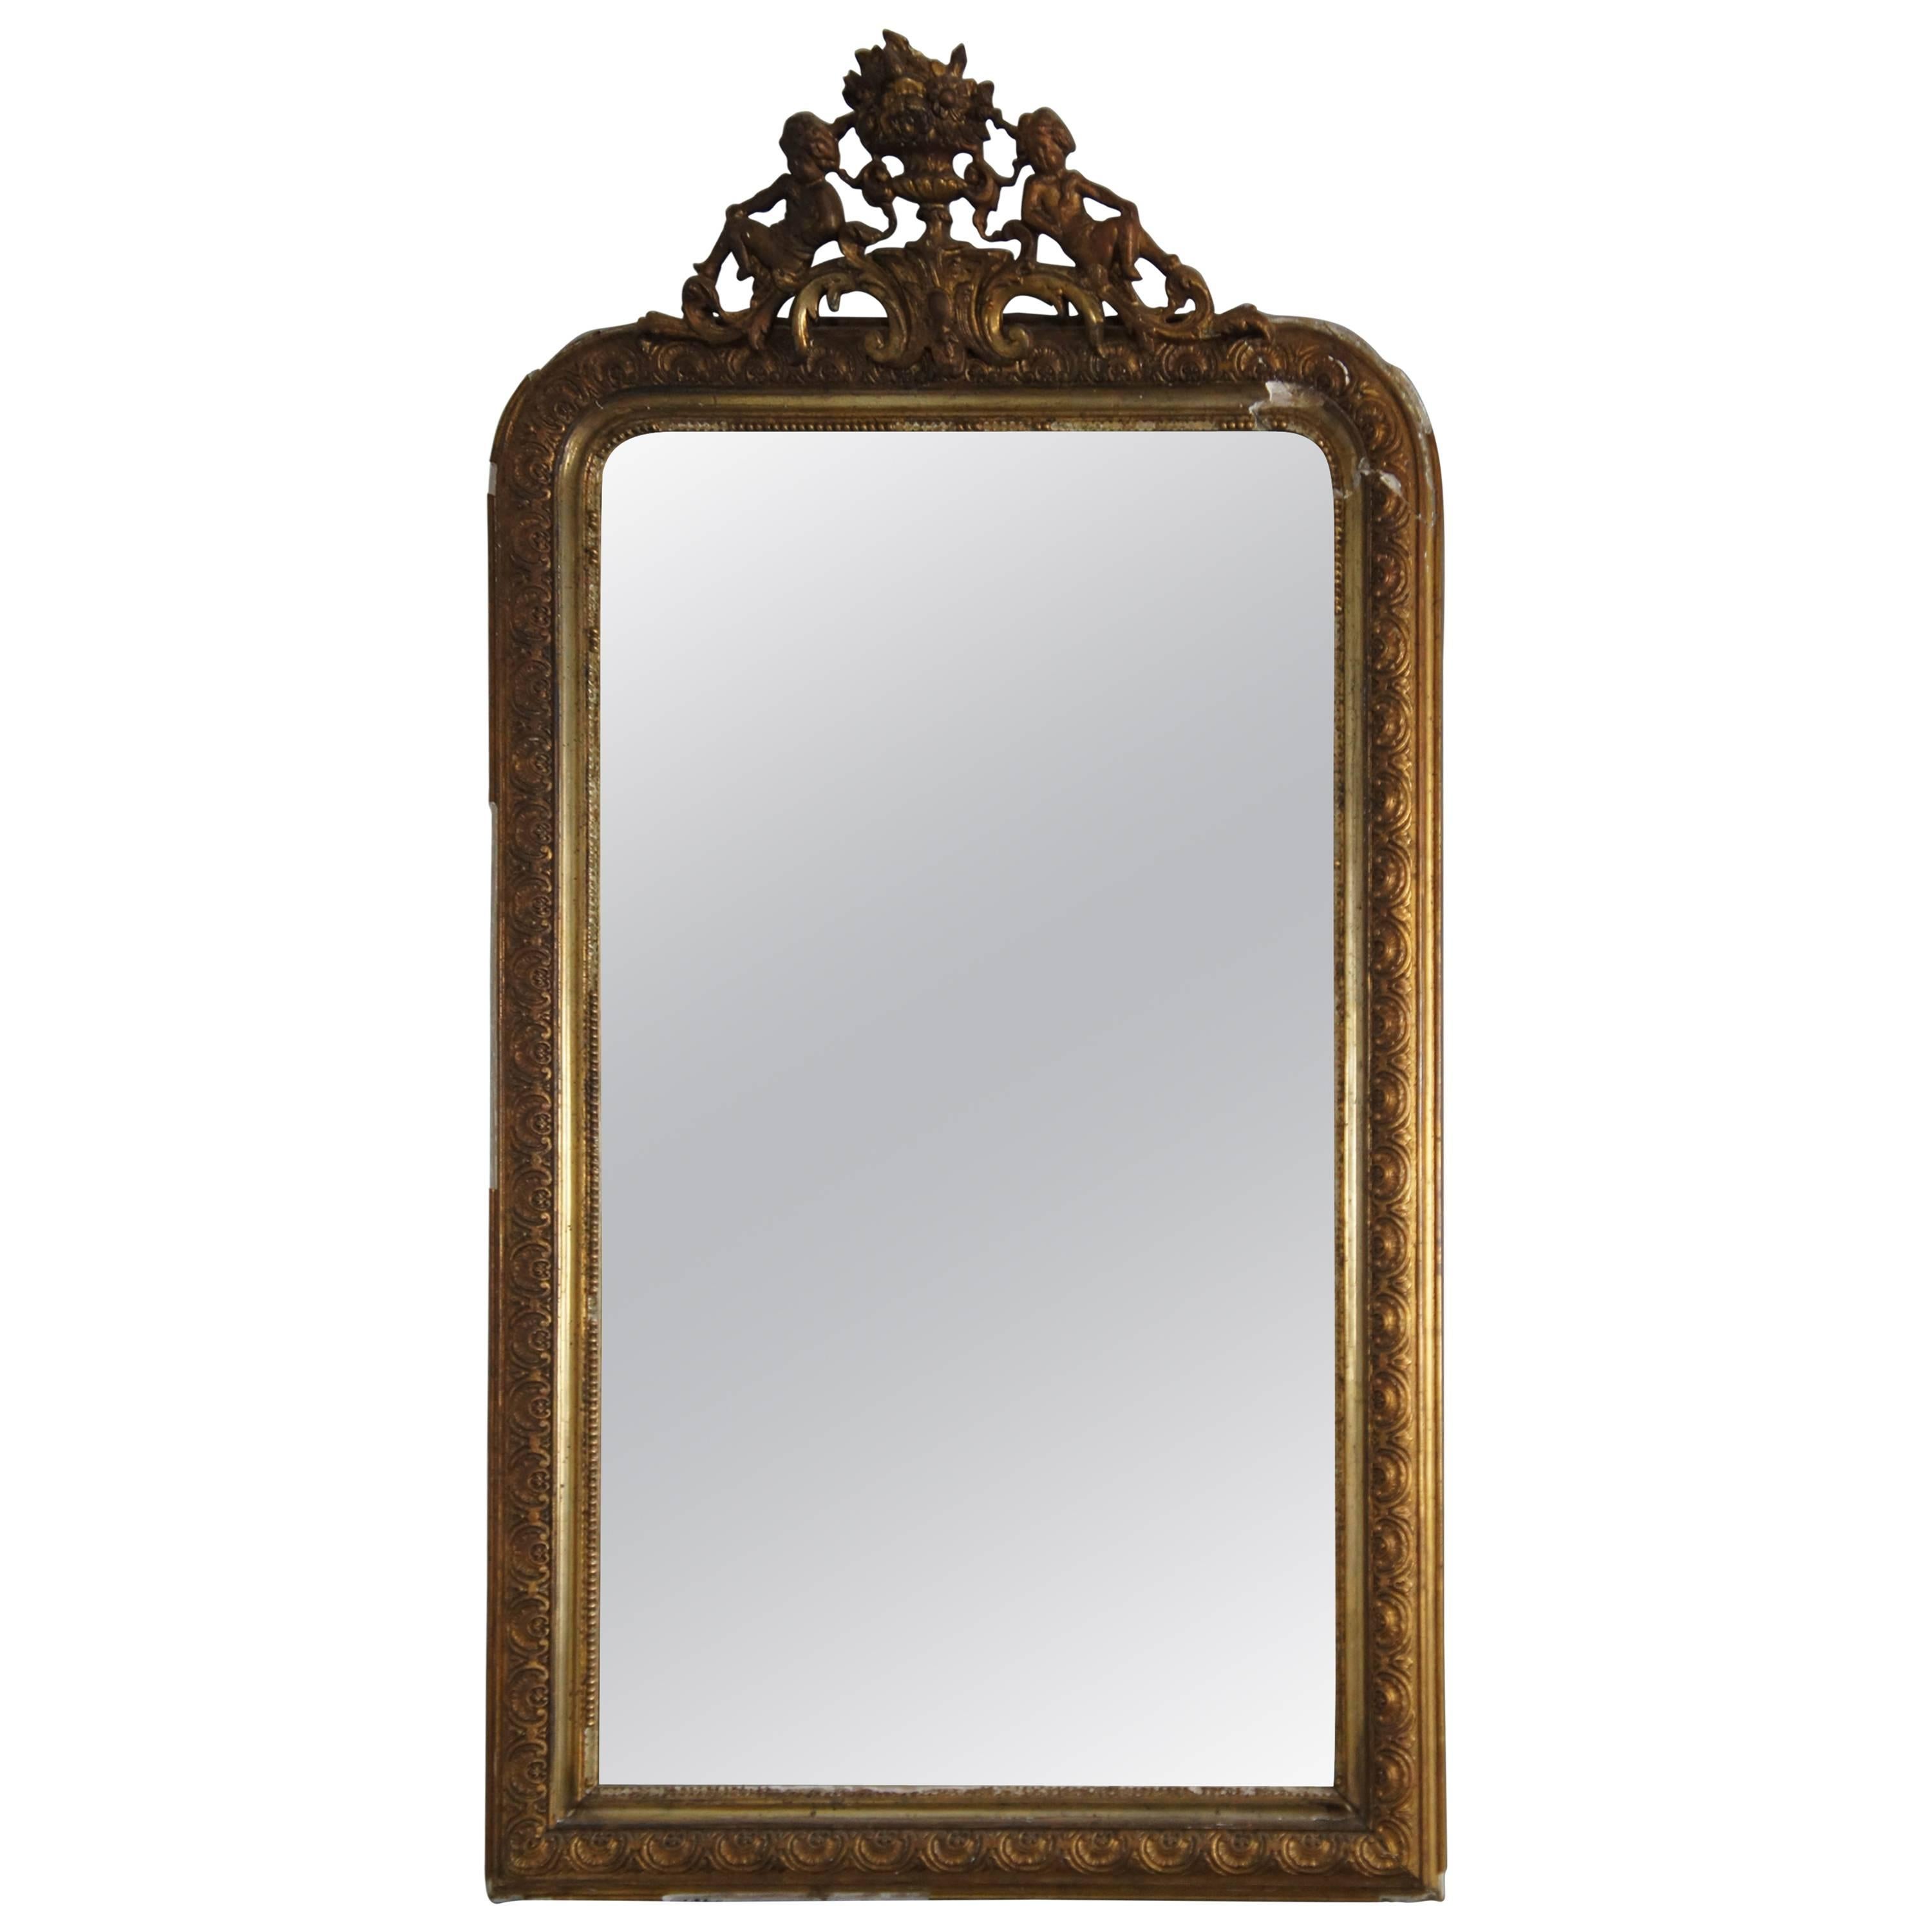 19th Century French Louis Philippe Gilt Gesso Overmantle Mirror Putti Cherub